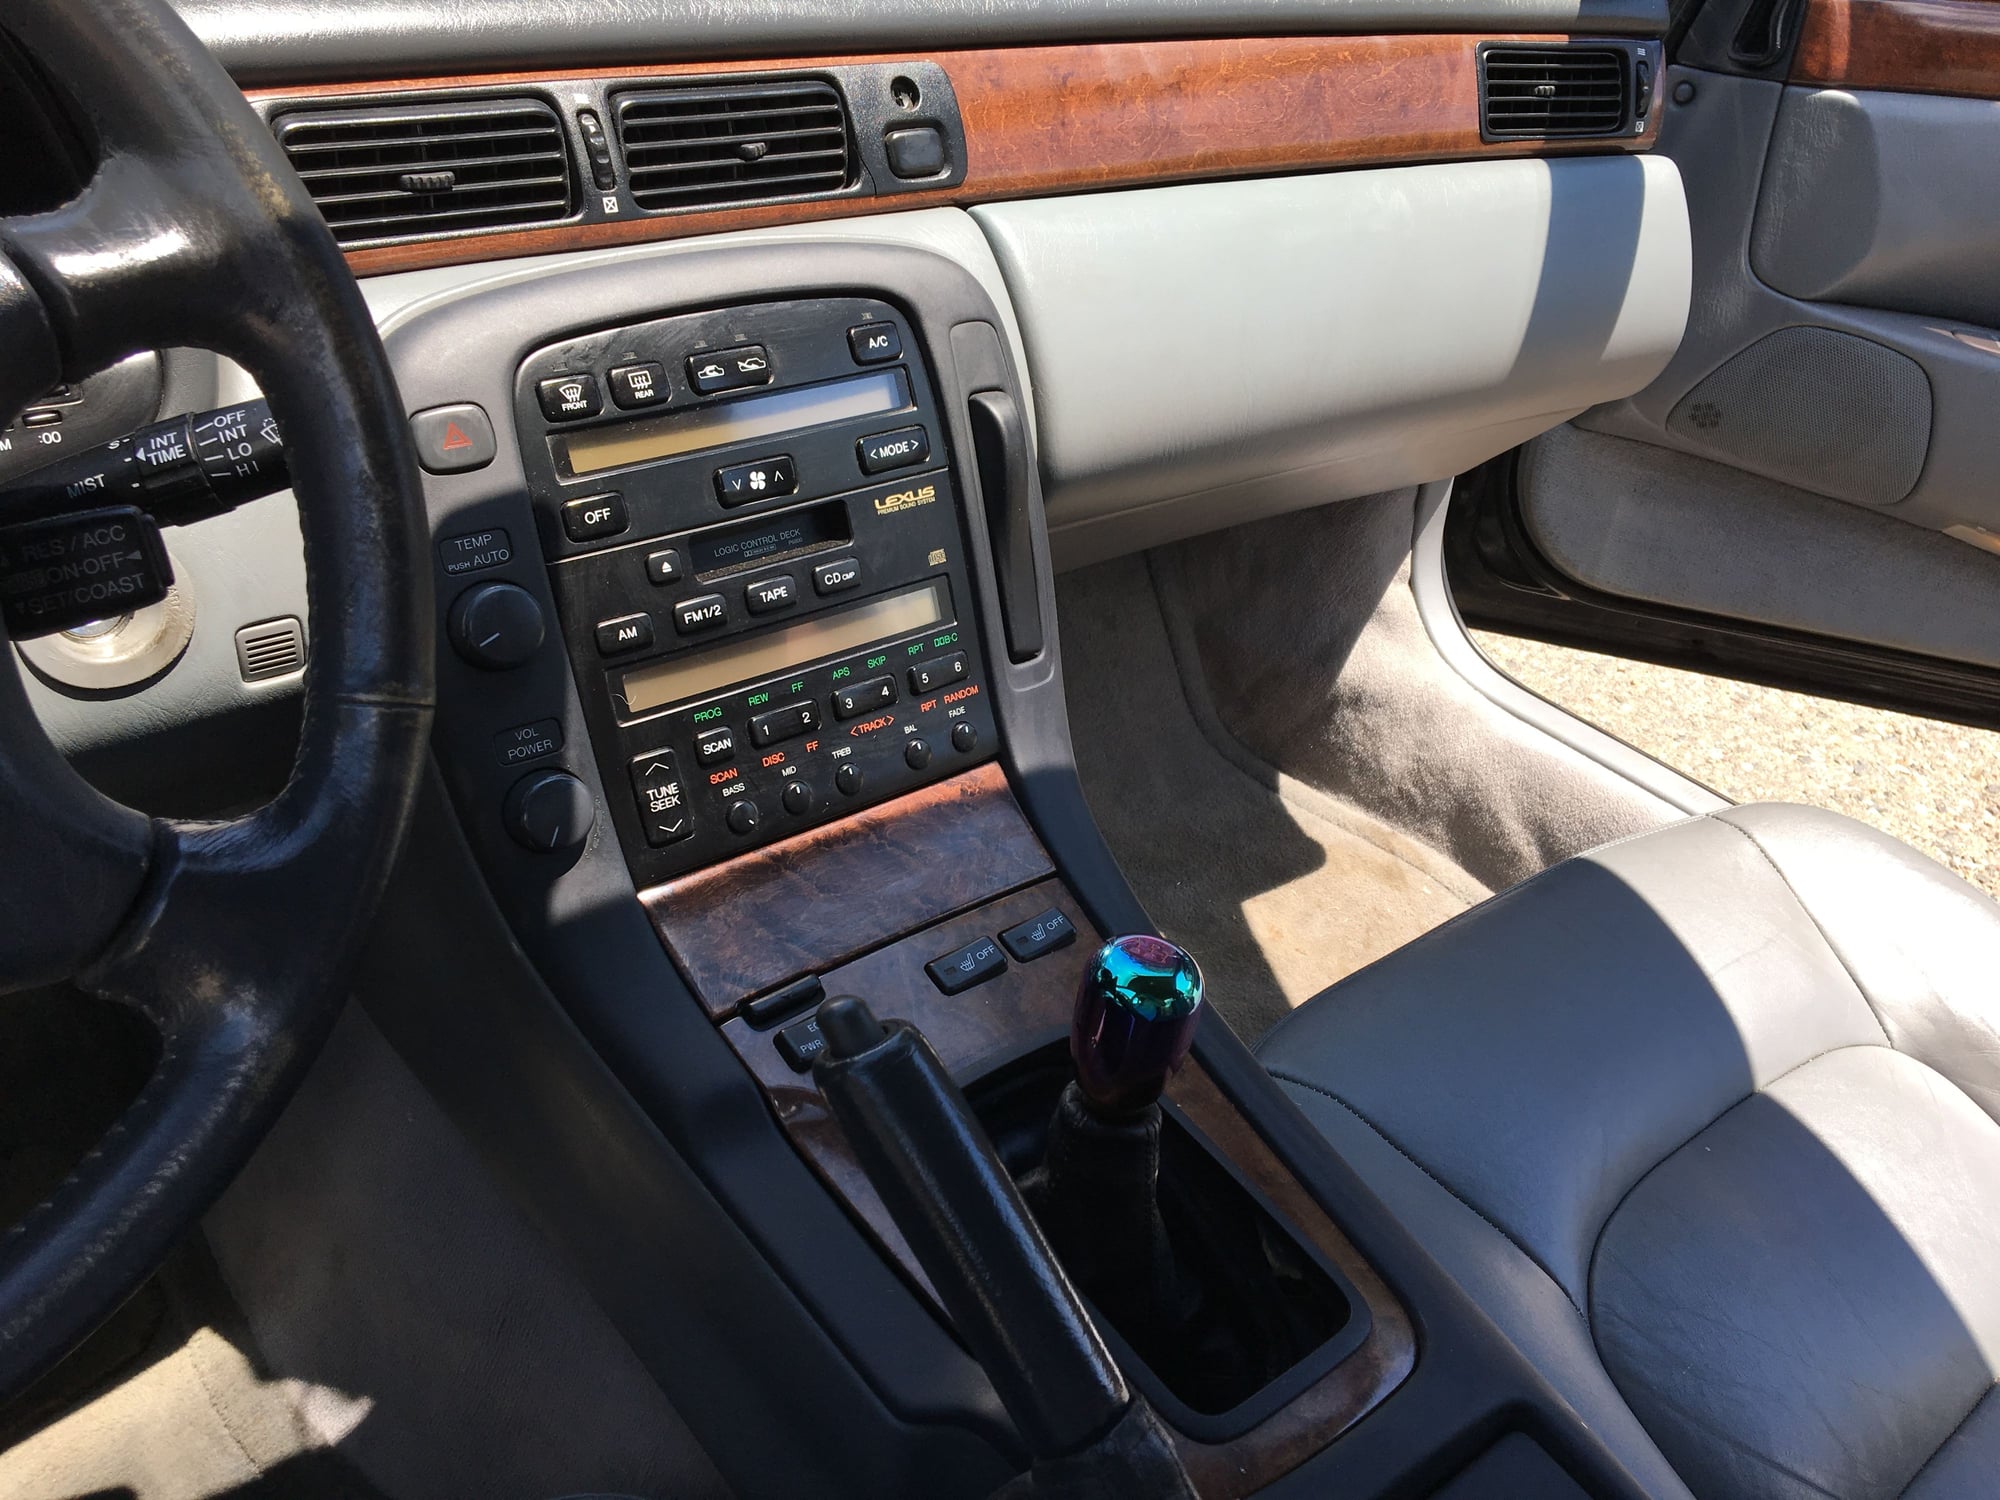 1992 Lexus SC300 - 92 SC300 2JZGTE Swapped 5 speed - Used - VIN jt8jz31c4n0008029 - 175,000 Miles - 6 cyl - 2WD - Manual - Coupe - Black - Longmont, CO 80503, United States